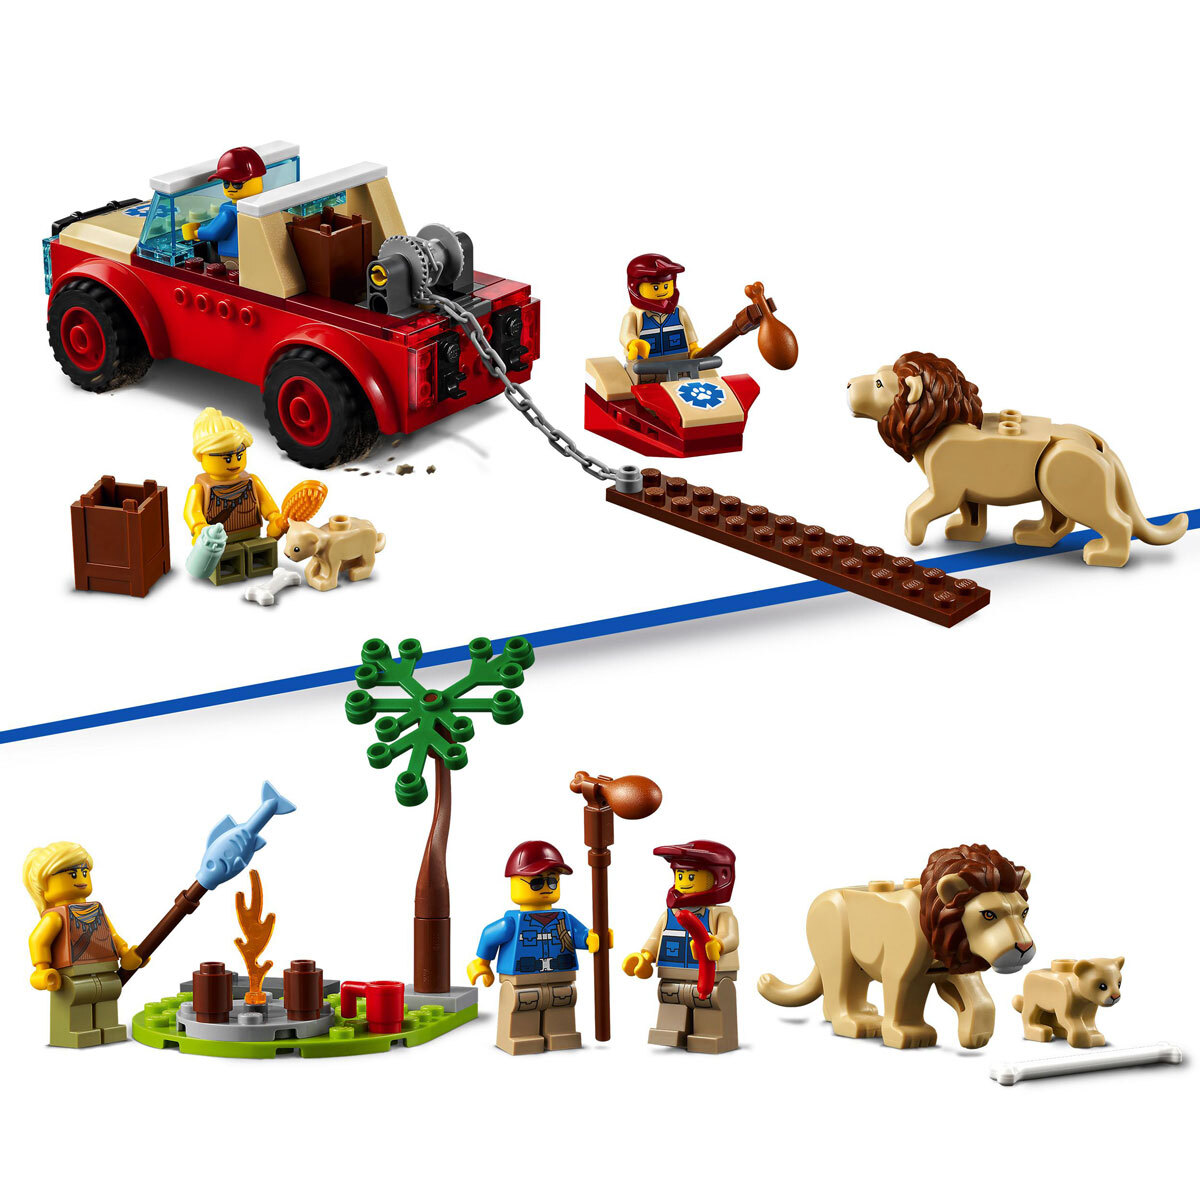 Buy LEGO City Wildlife Rescue Operation Close up Image at costco.co.uk